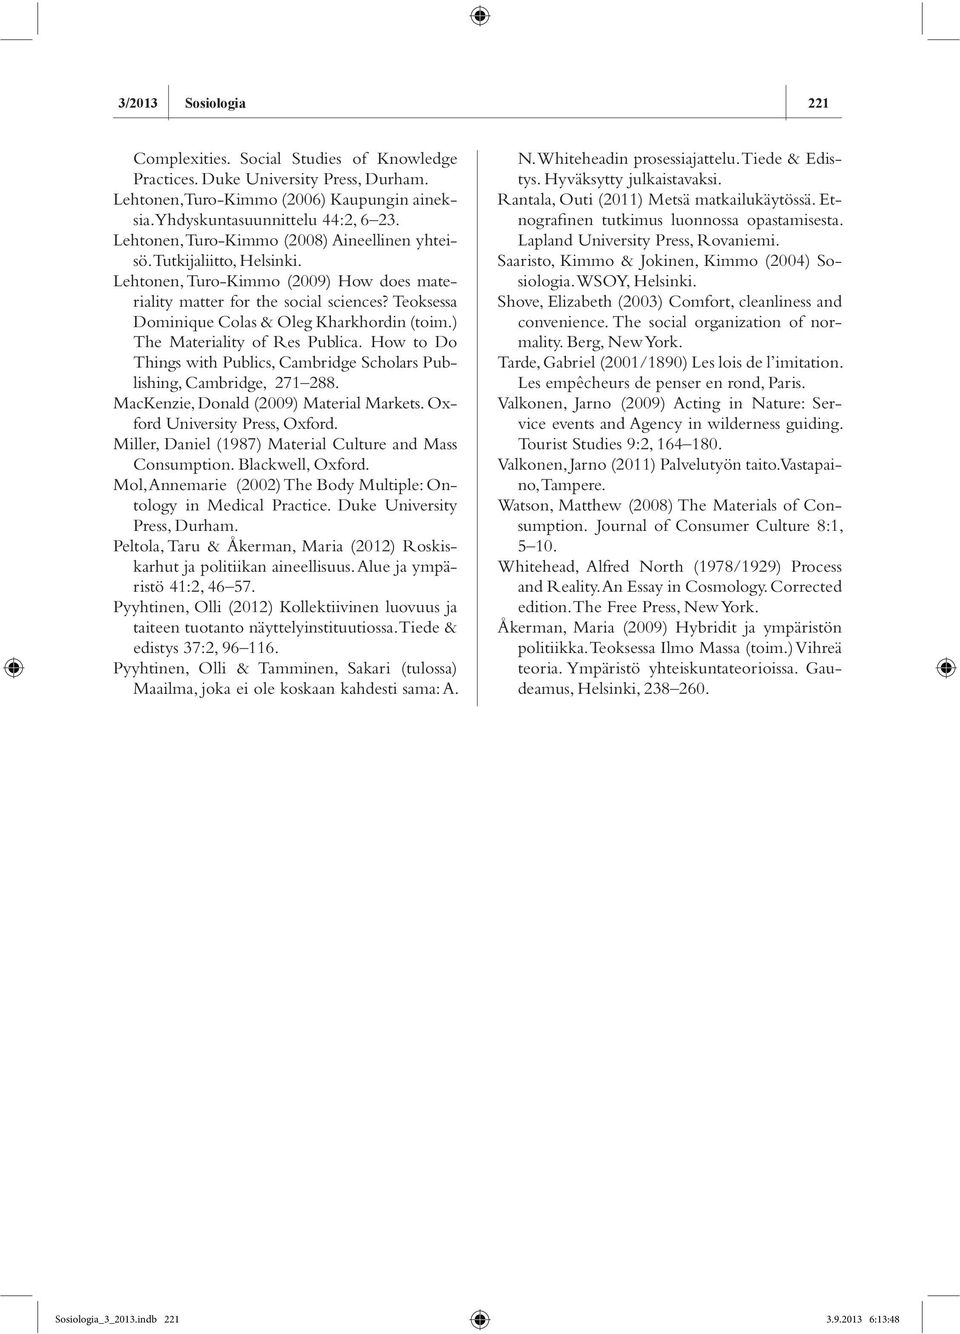 Teoksessa Dominique Colas & Oleg Kharkhordin (toim.) The Materiality of Res Publica. How to Do Things with Publics, Cambridge Scholars Publishing, Cambridge, 271 288.